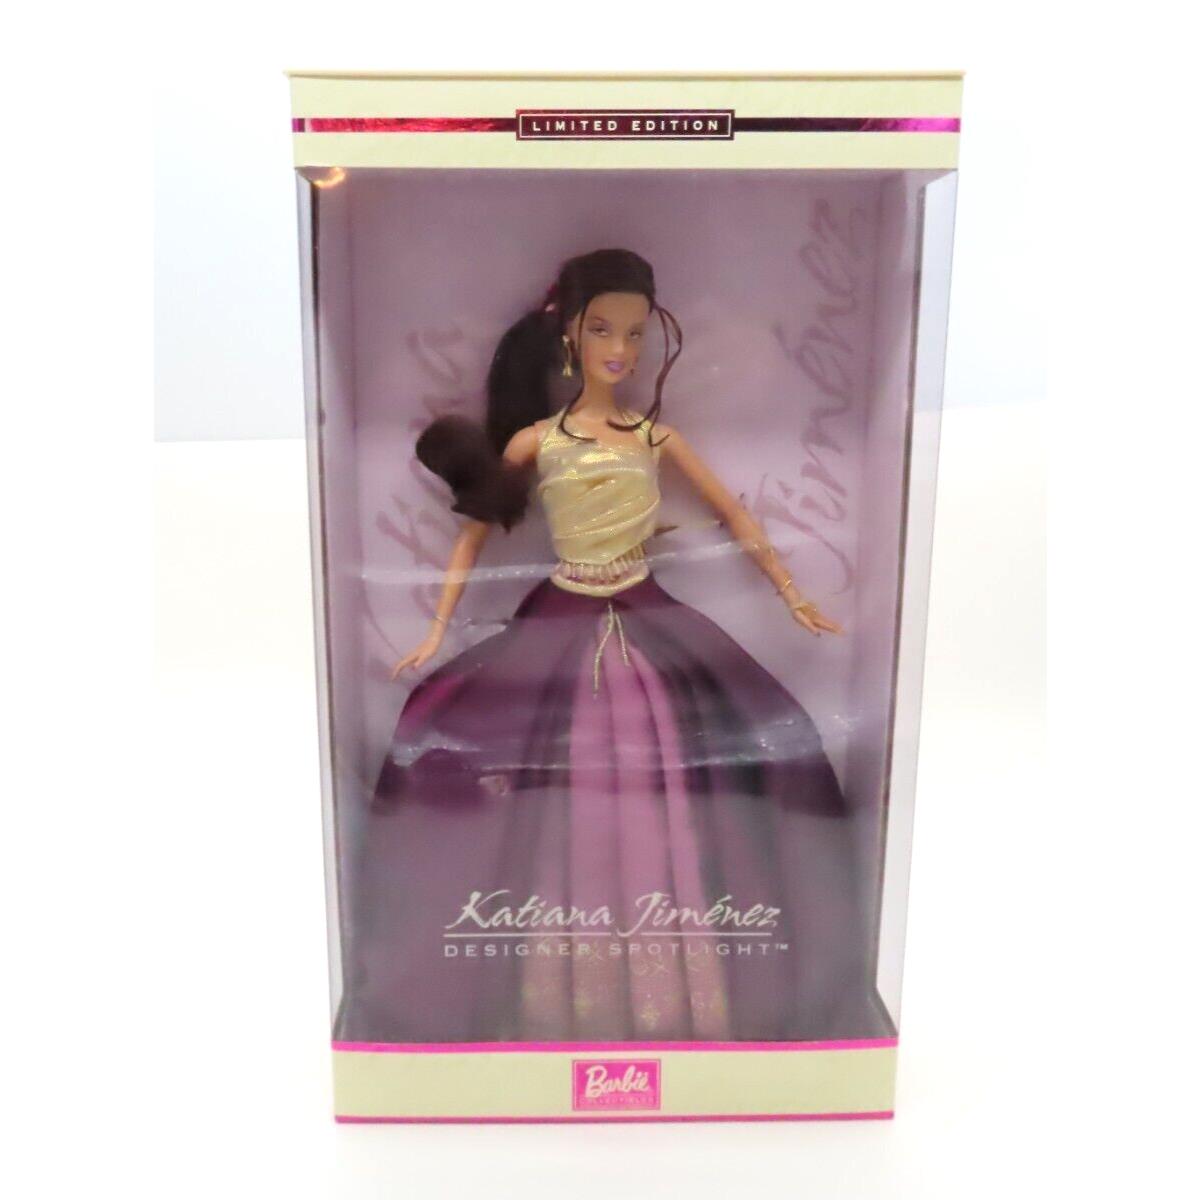 Katiana Jimenez Designer Spotlight Barbie Collectibles Limited